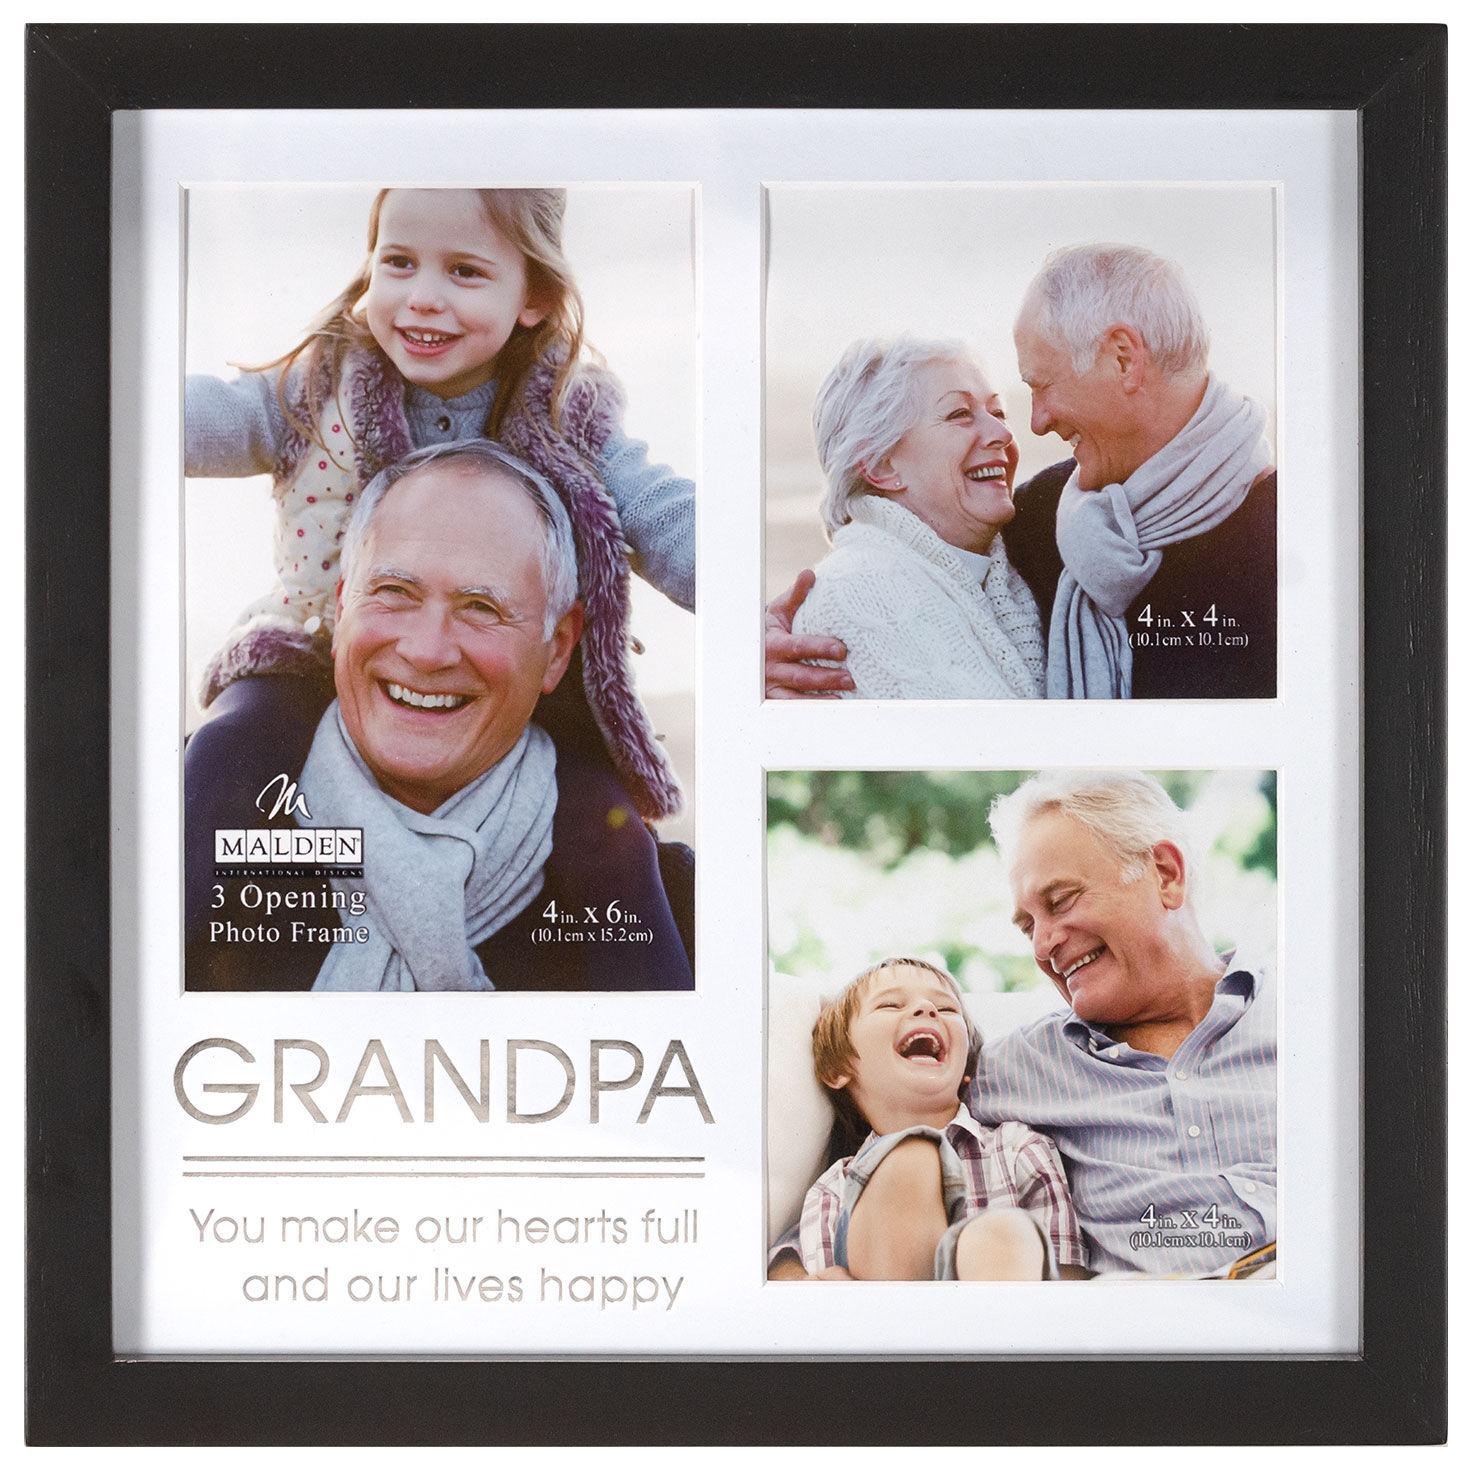 Malden Grandpa Modern Collage Picture Frame for only USD 19.99 | Hallmark